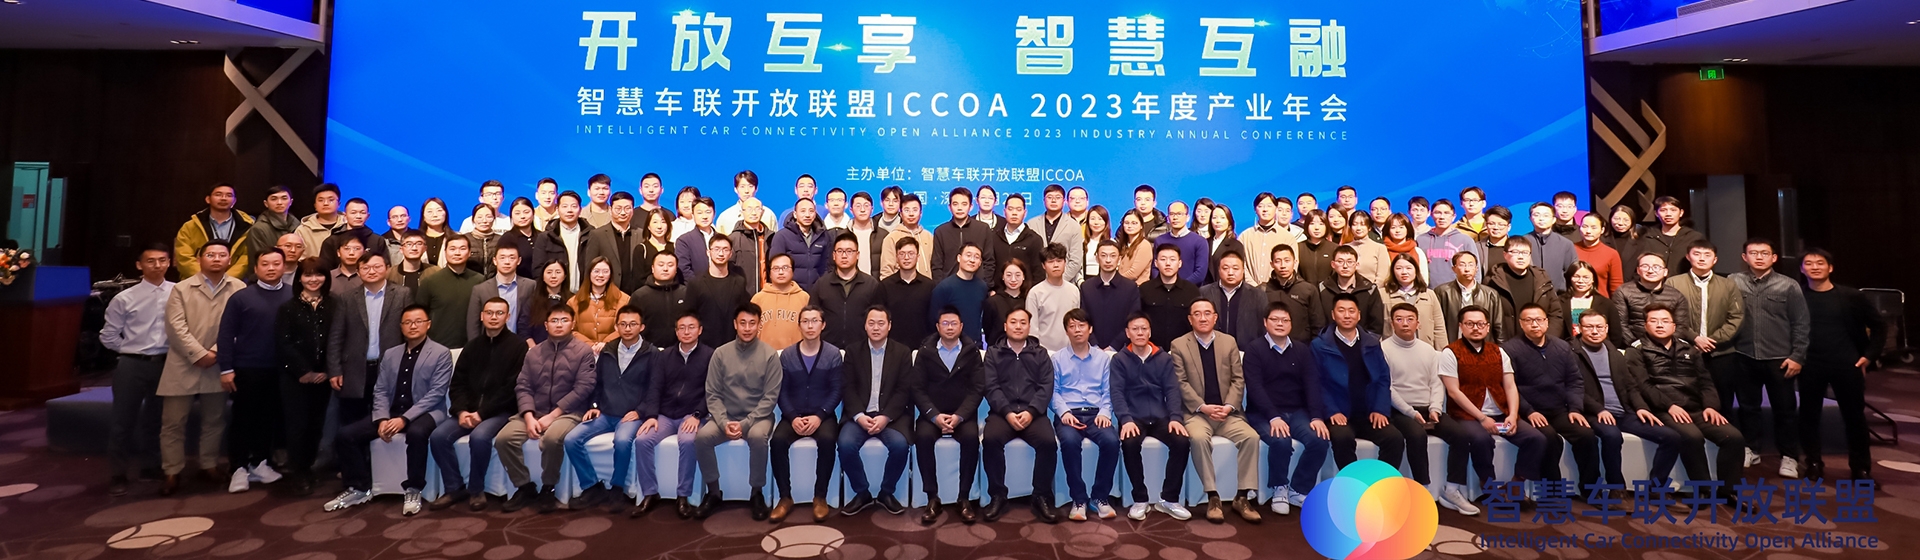 ICCOA 2023年度产业年会